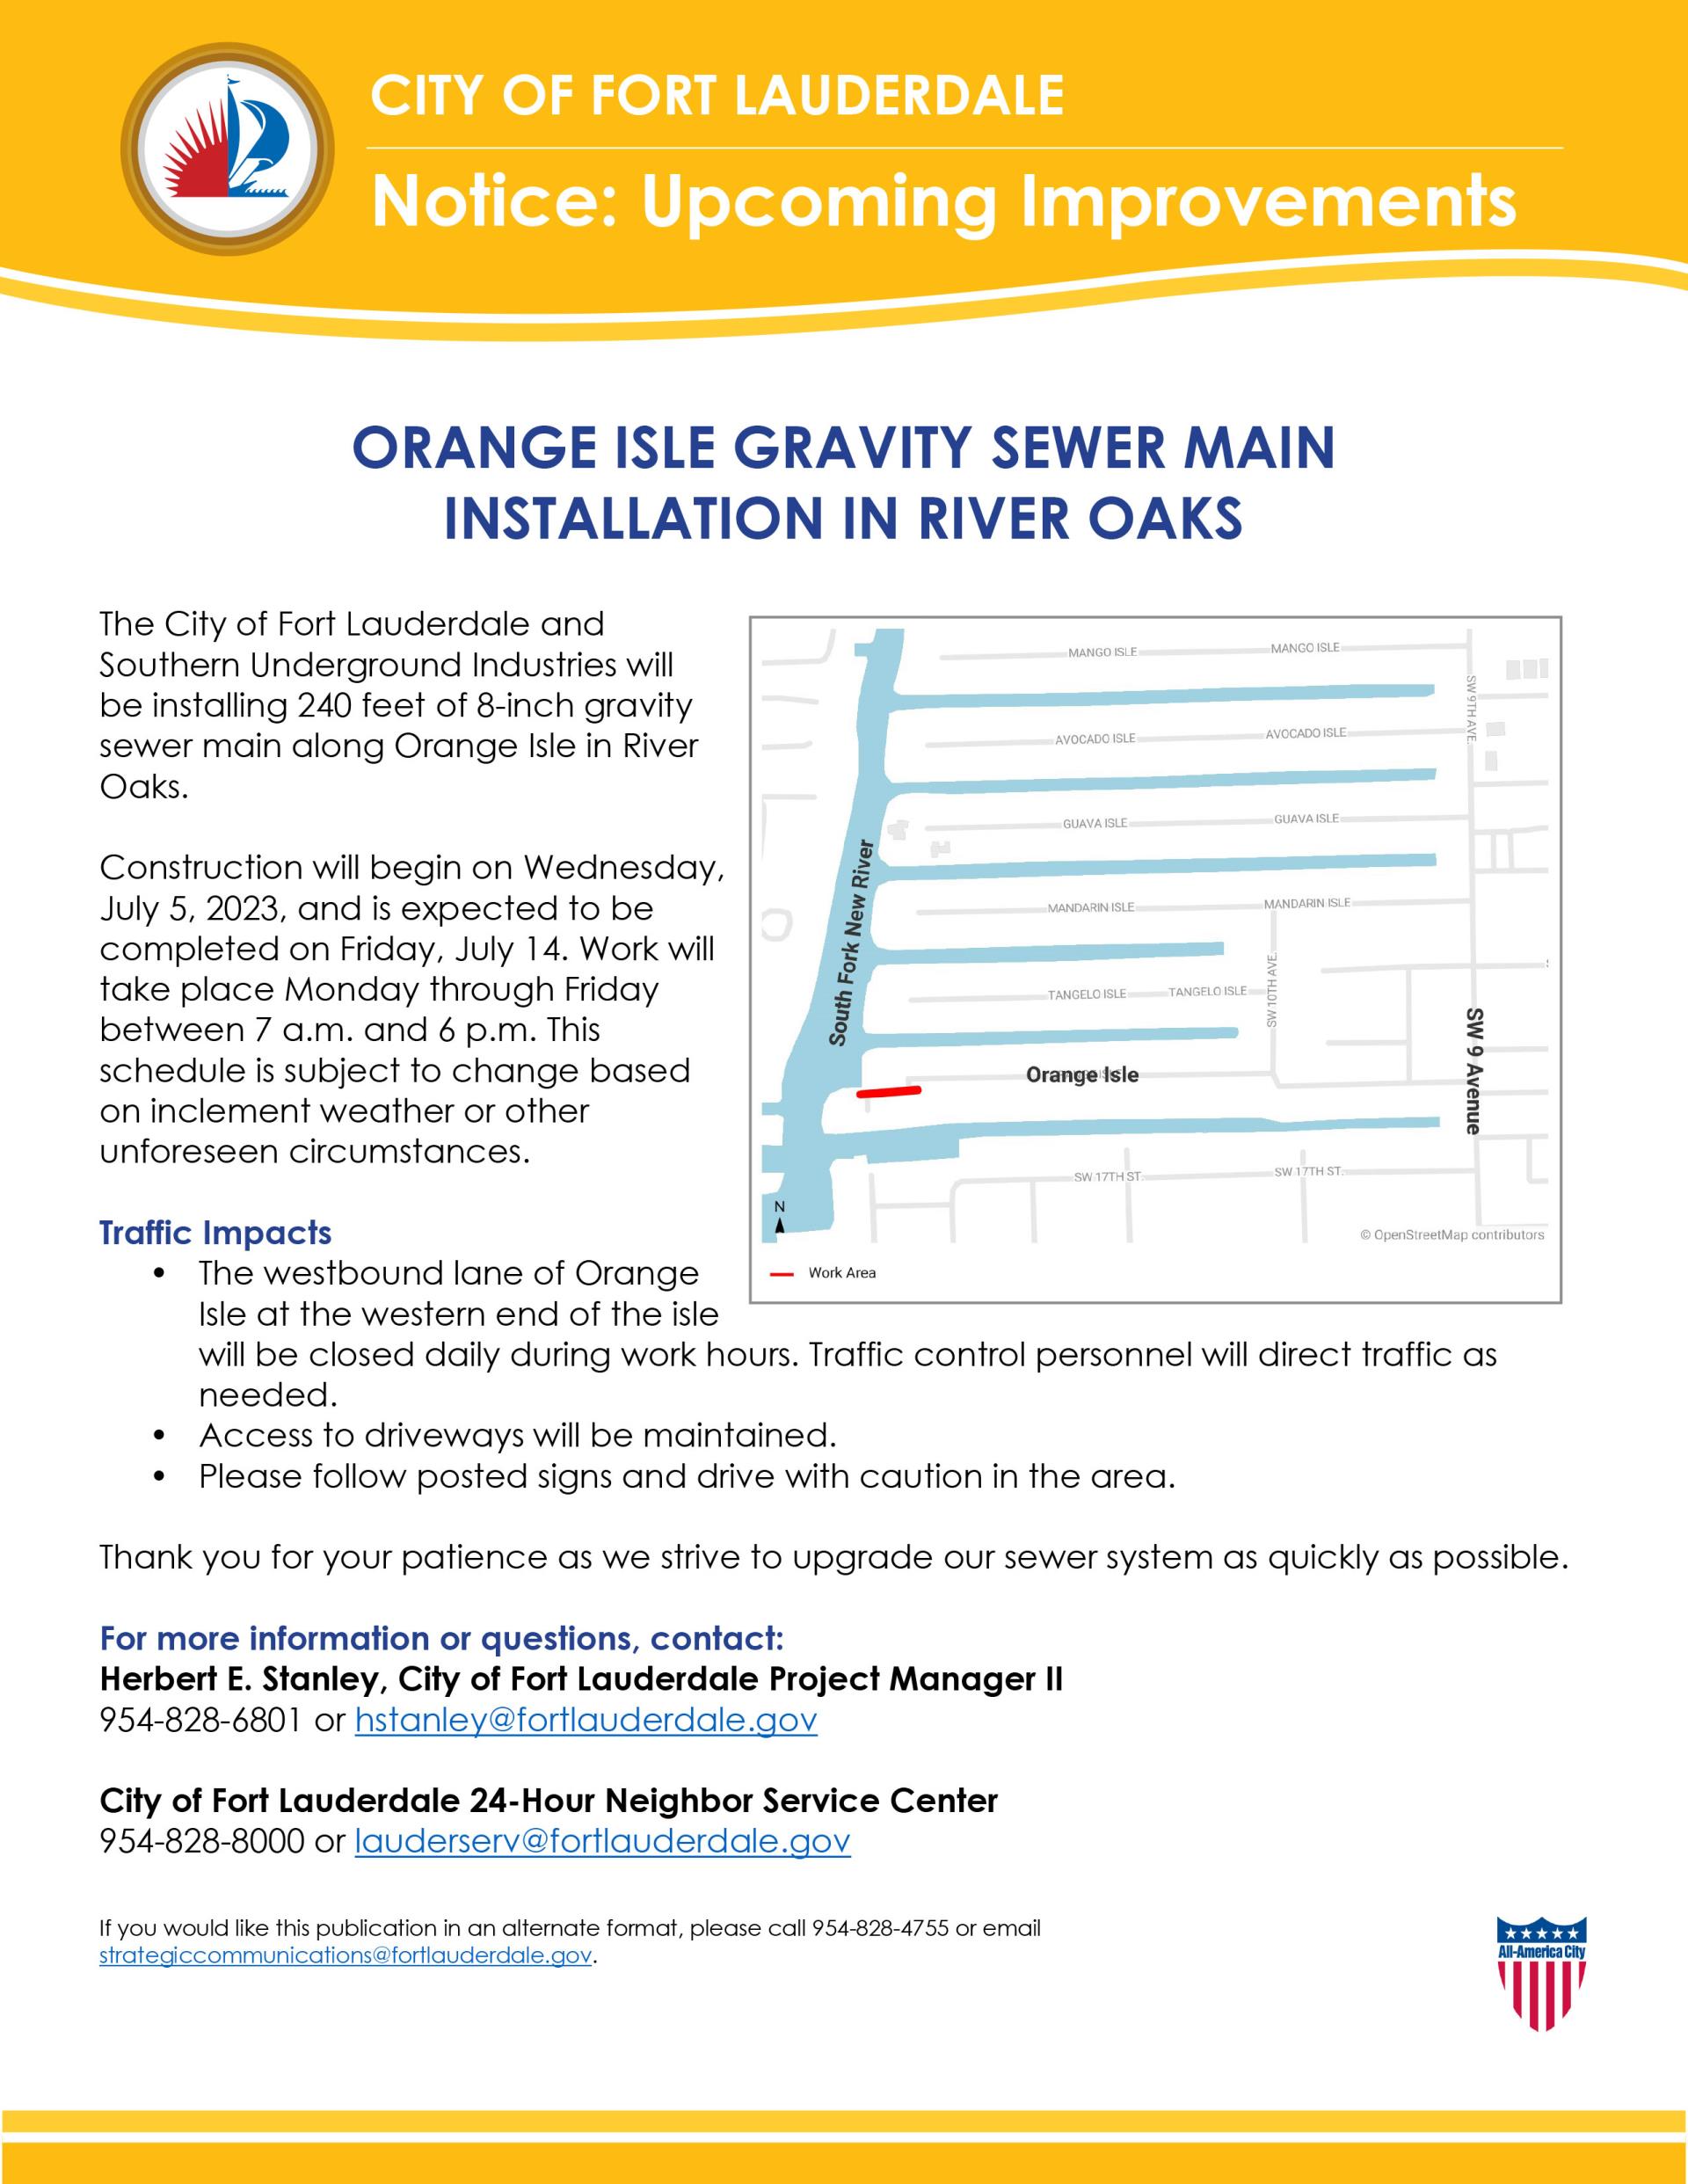 Orange-Isle-Gravity-Sewer-Main-Installation-in-River-Oaks